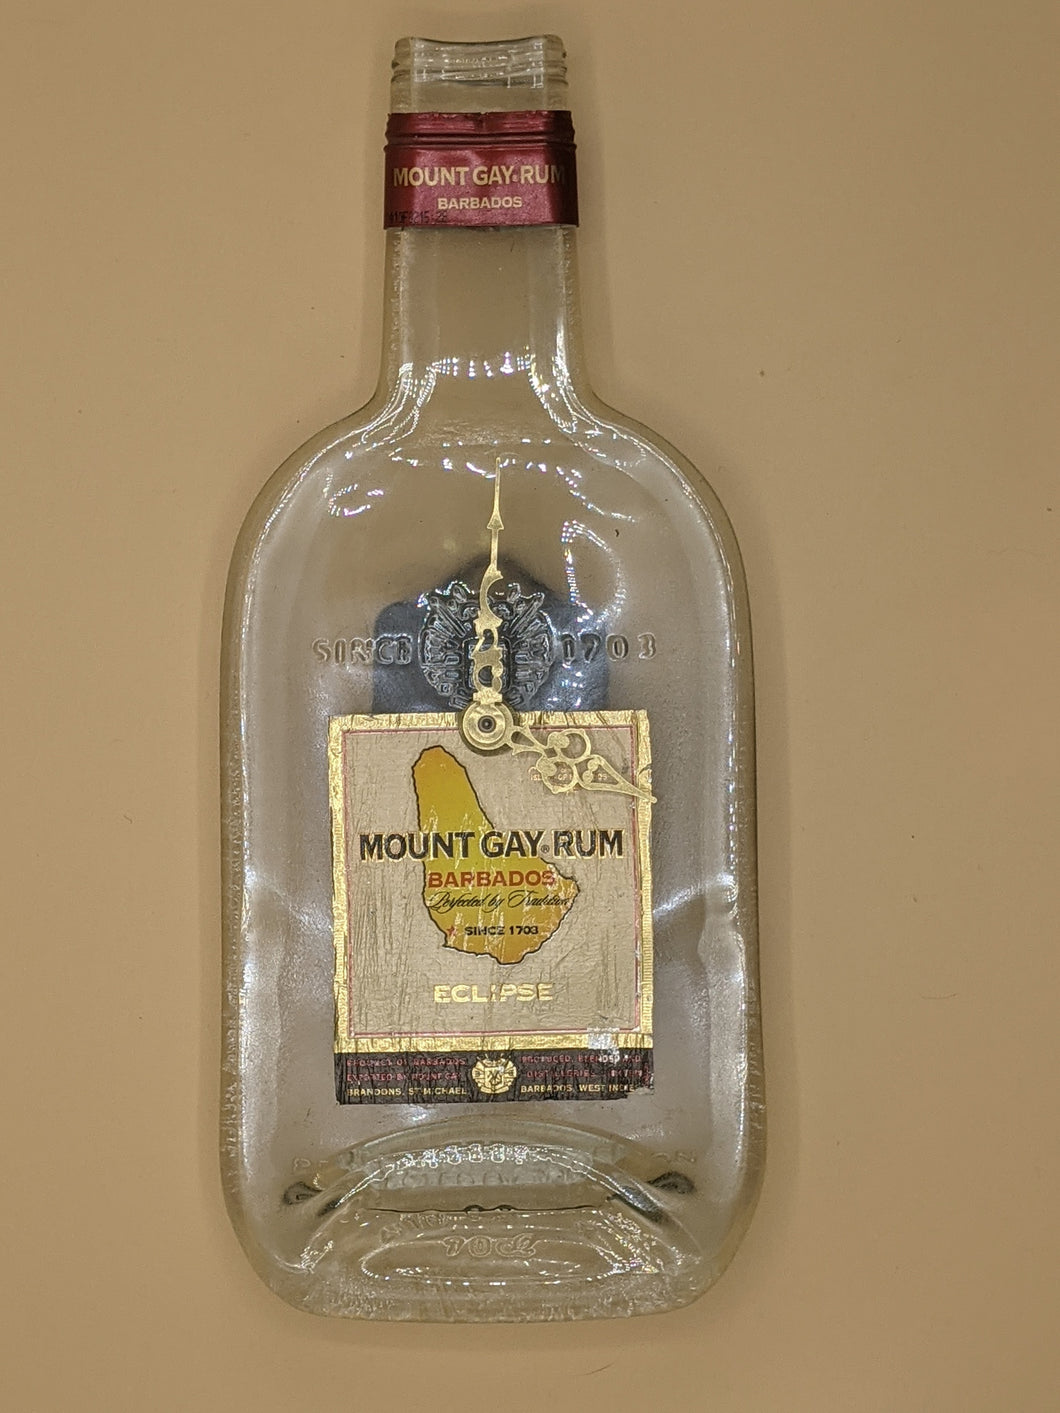 Mout Gay rum bottle clock